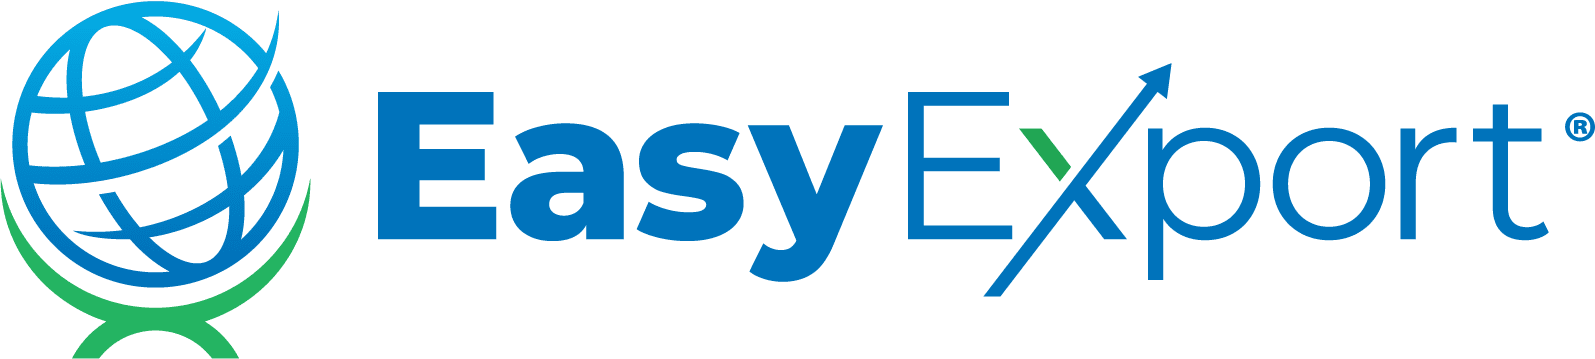 EasyExport_Master ® Logo